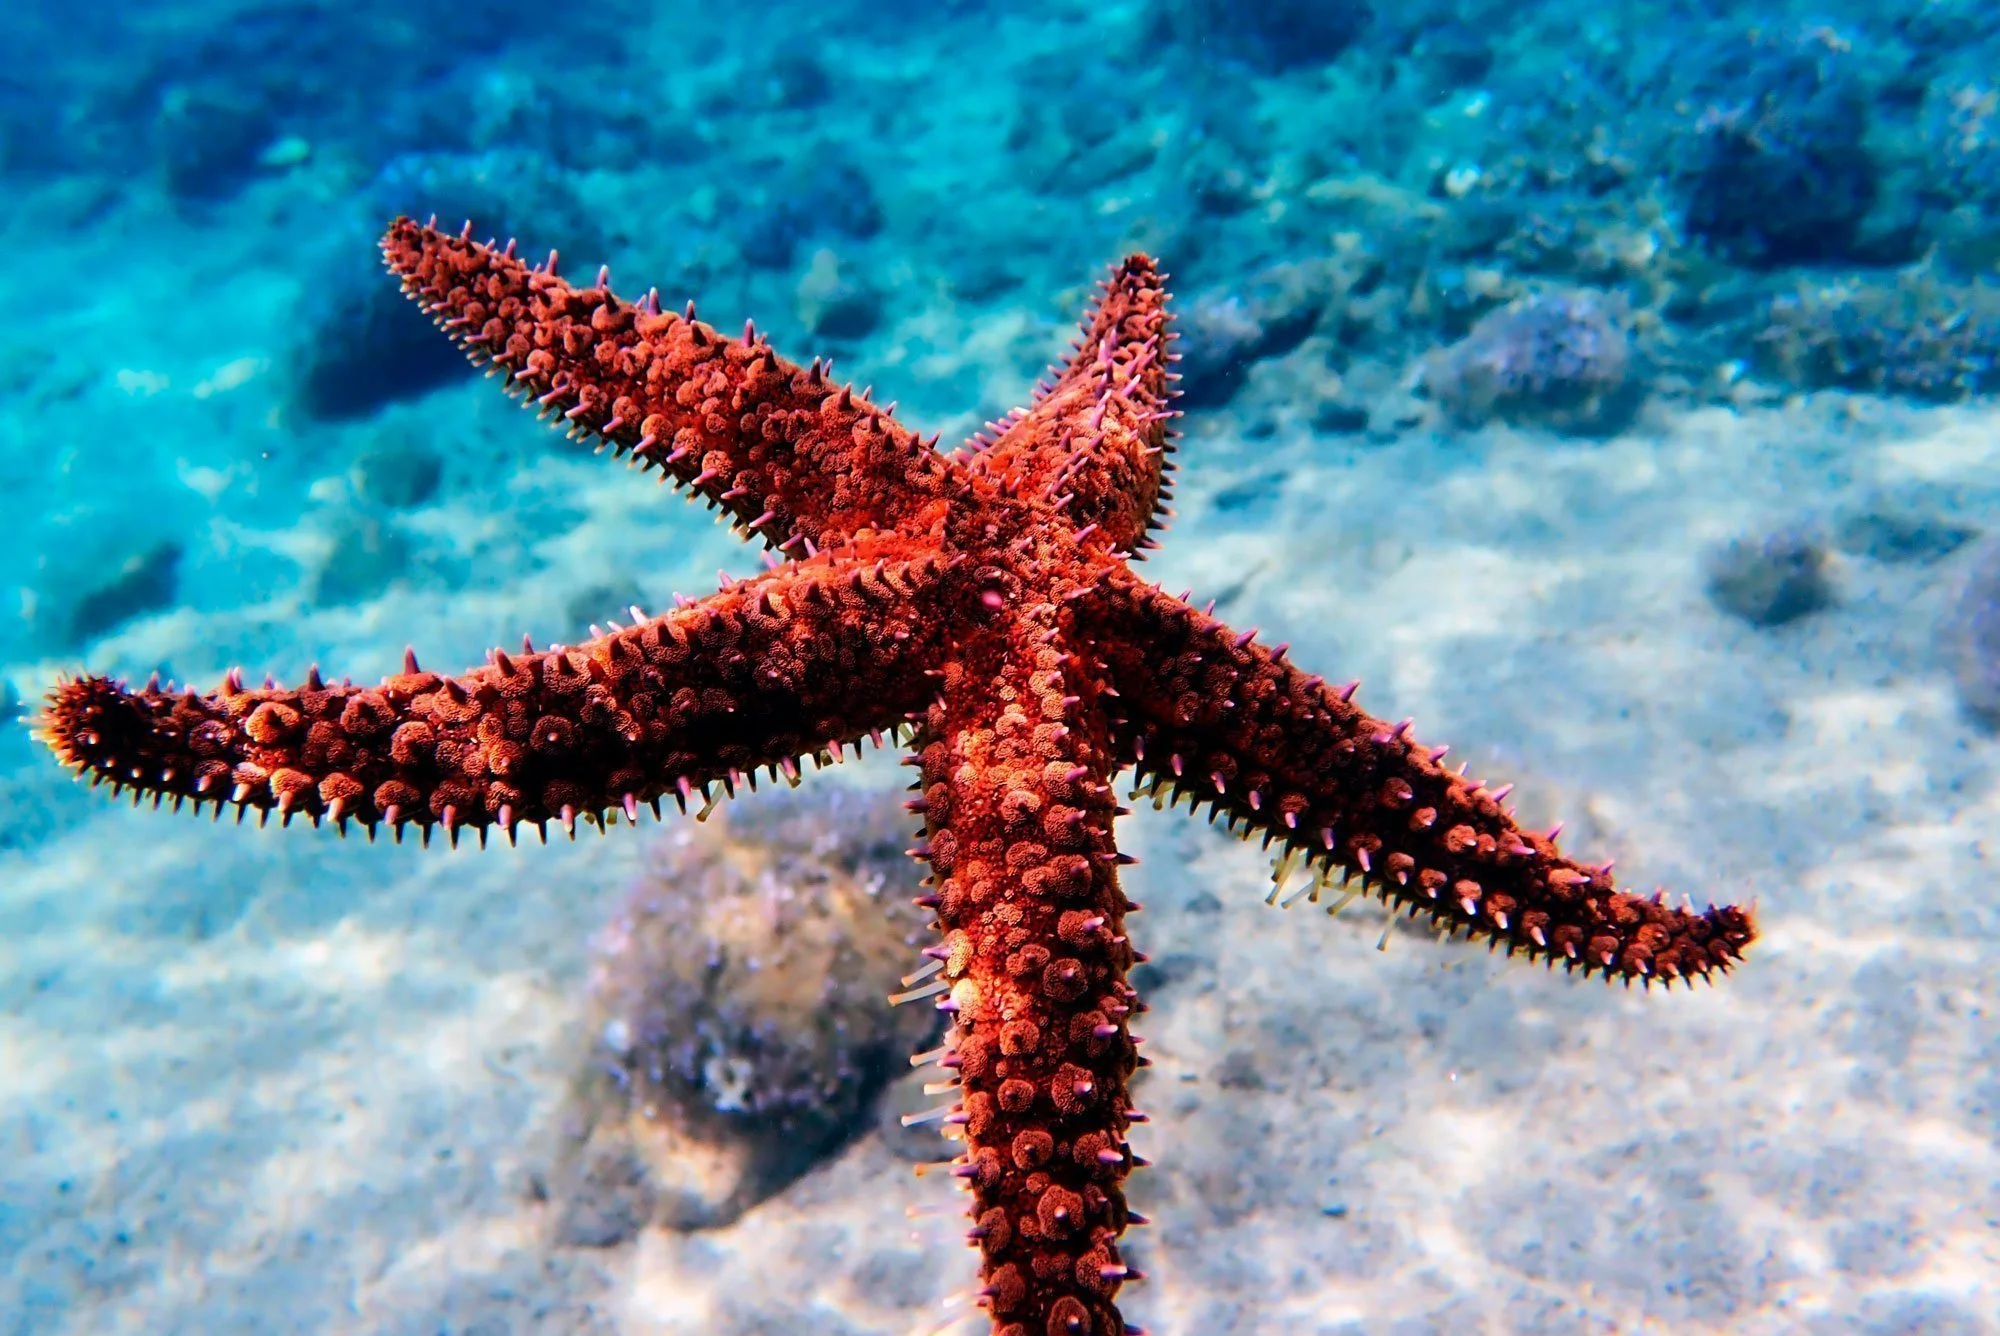 How Do Starfish Eat? - American Oceans